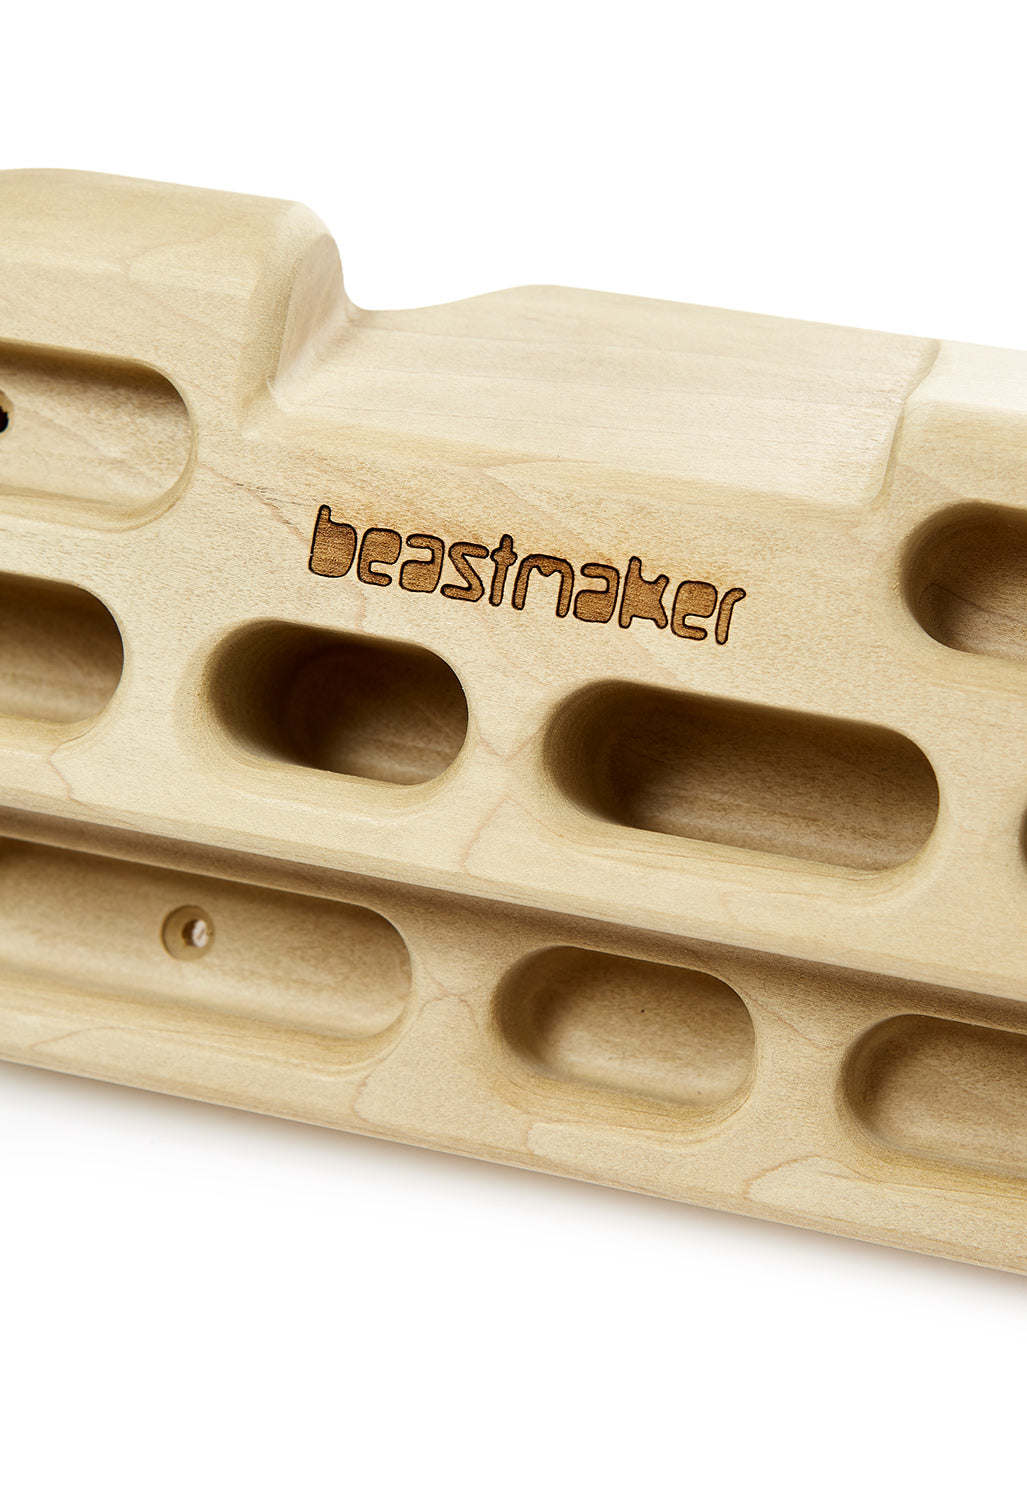 Beastmaker 1000 - One of the best seller fingerboards around the world